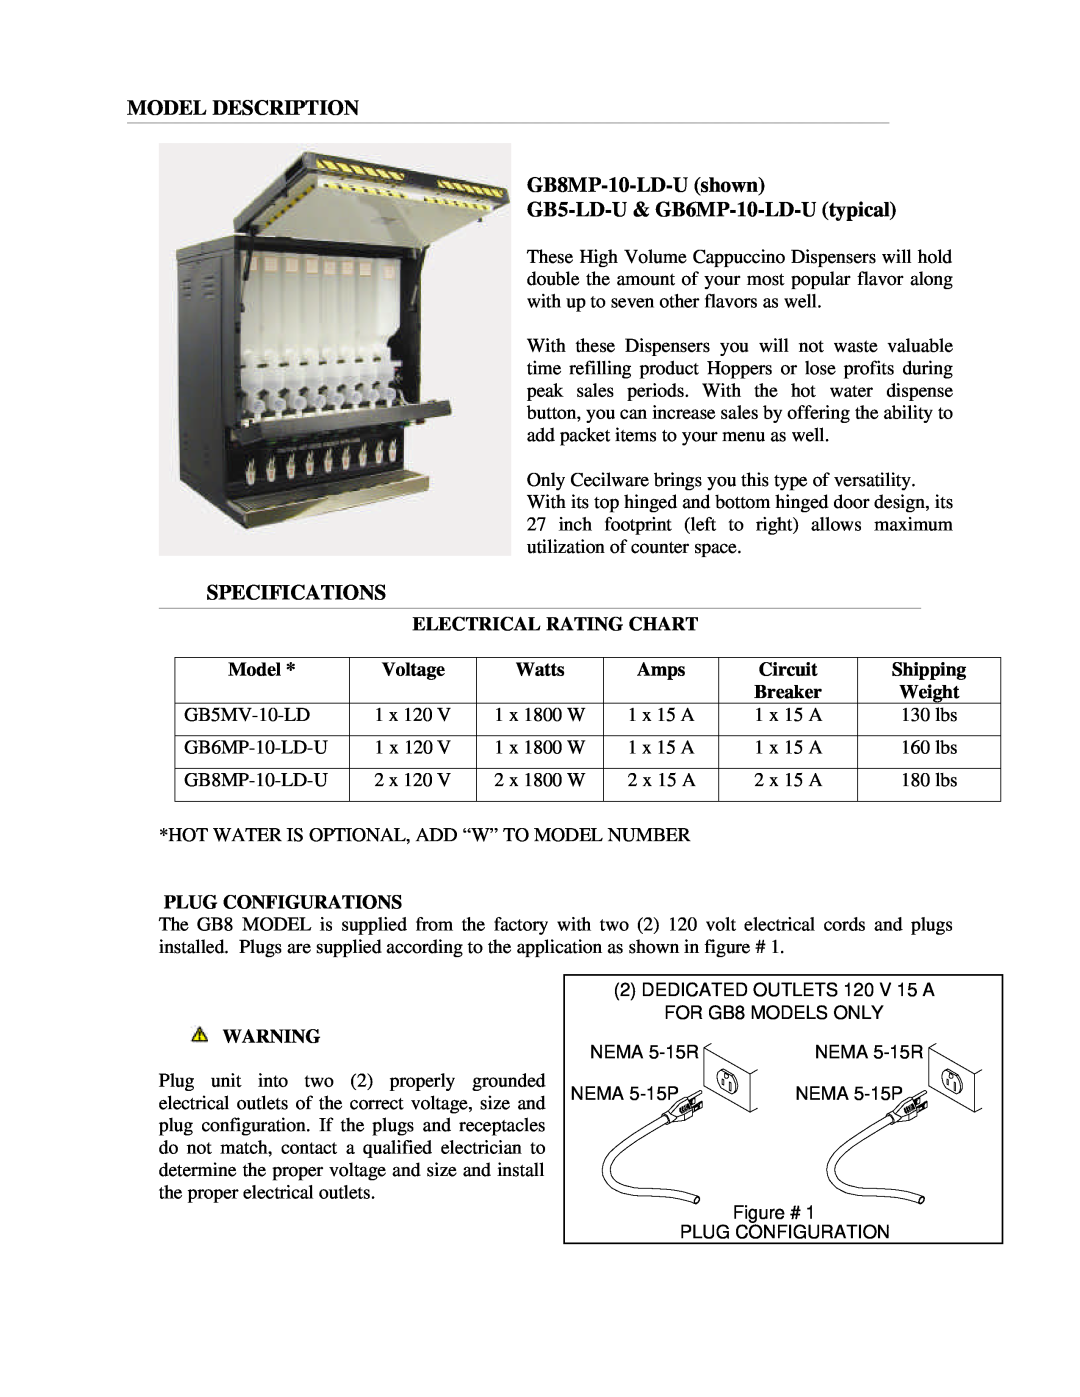 Cecilware GB5MV-10-LD MODEL DESCRIPTION GB8MP-10-LD-Ushown, GB5-LD-U& GB6MP-10-LD-Utypical, Specifications, Model, Voltage 